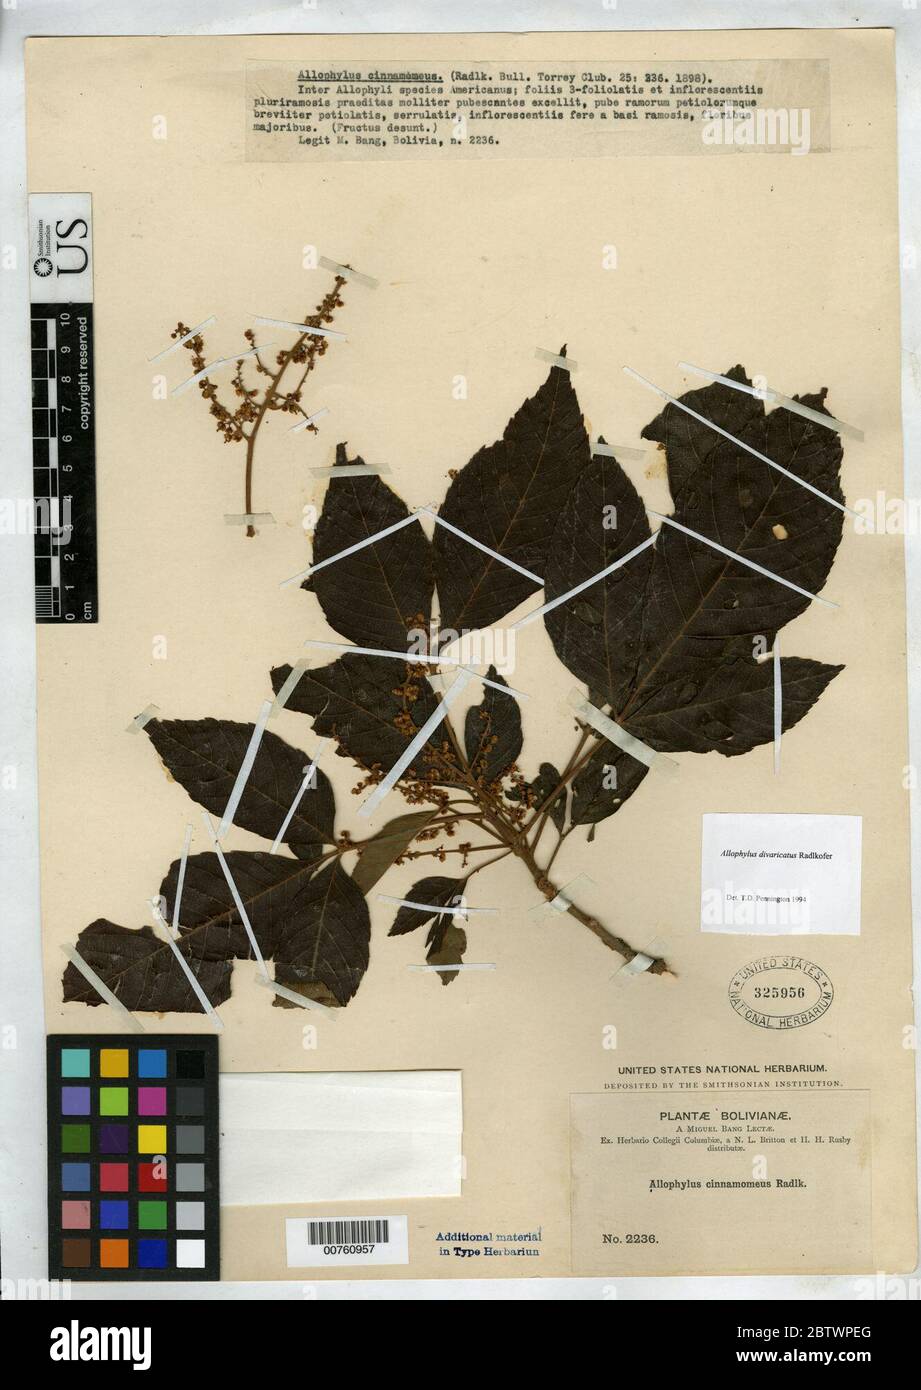 Allophylus divaricatus Radlk. Stock Photo